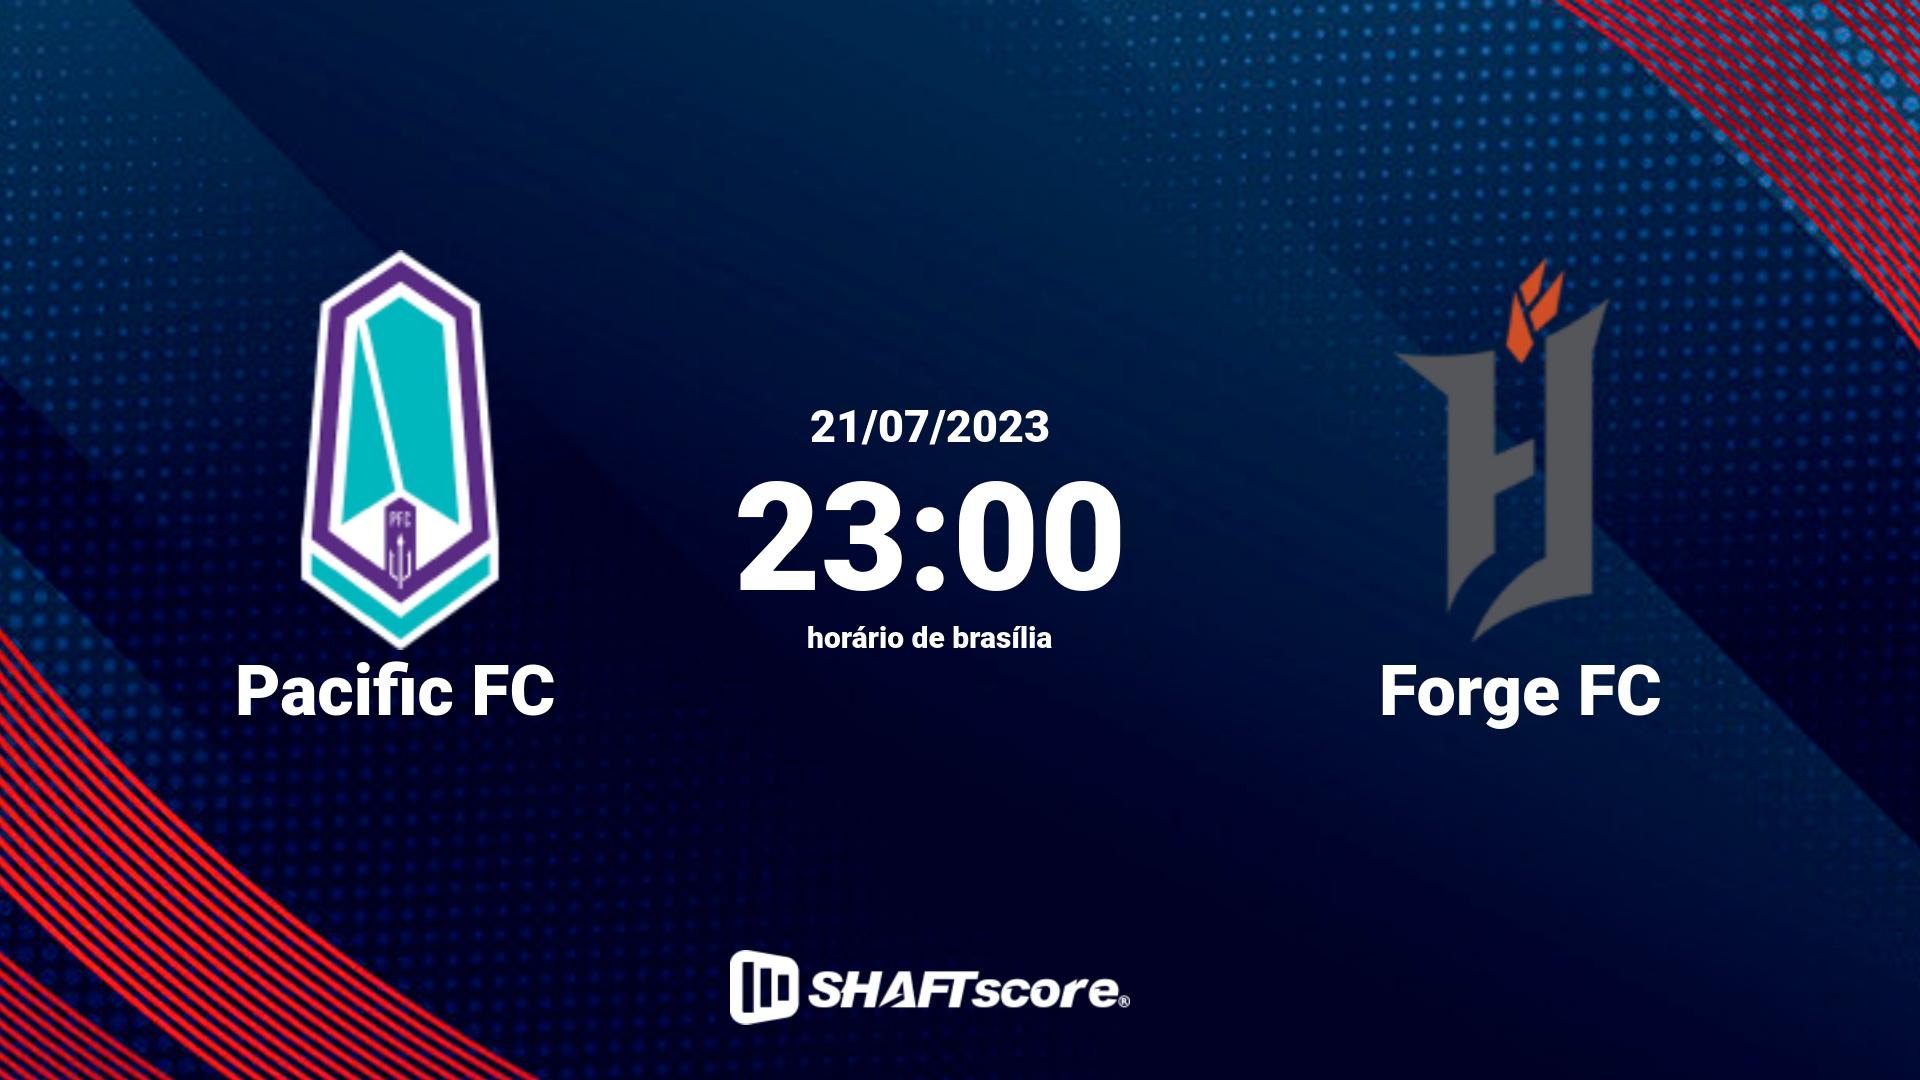 Estatísticas do jogo Pacific FC vs Forge FC 21.07 23:00